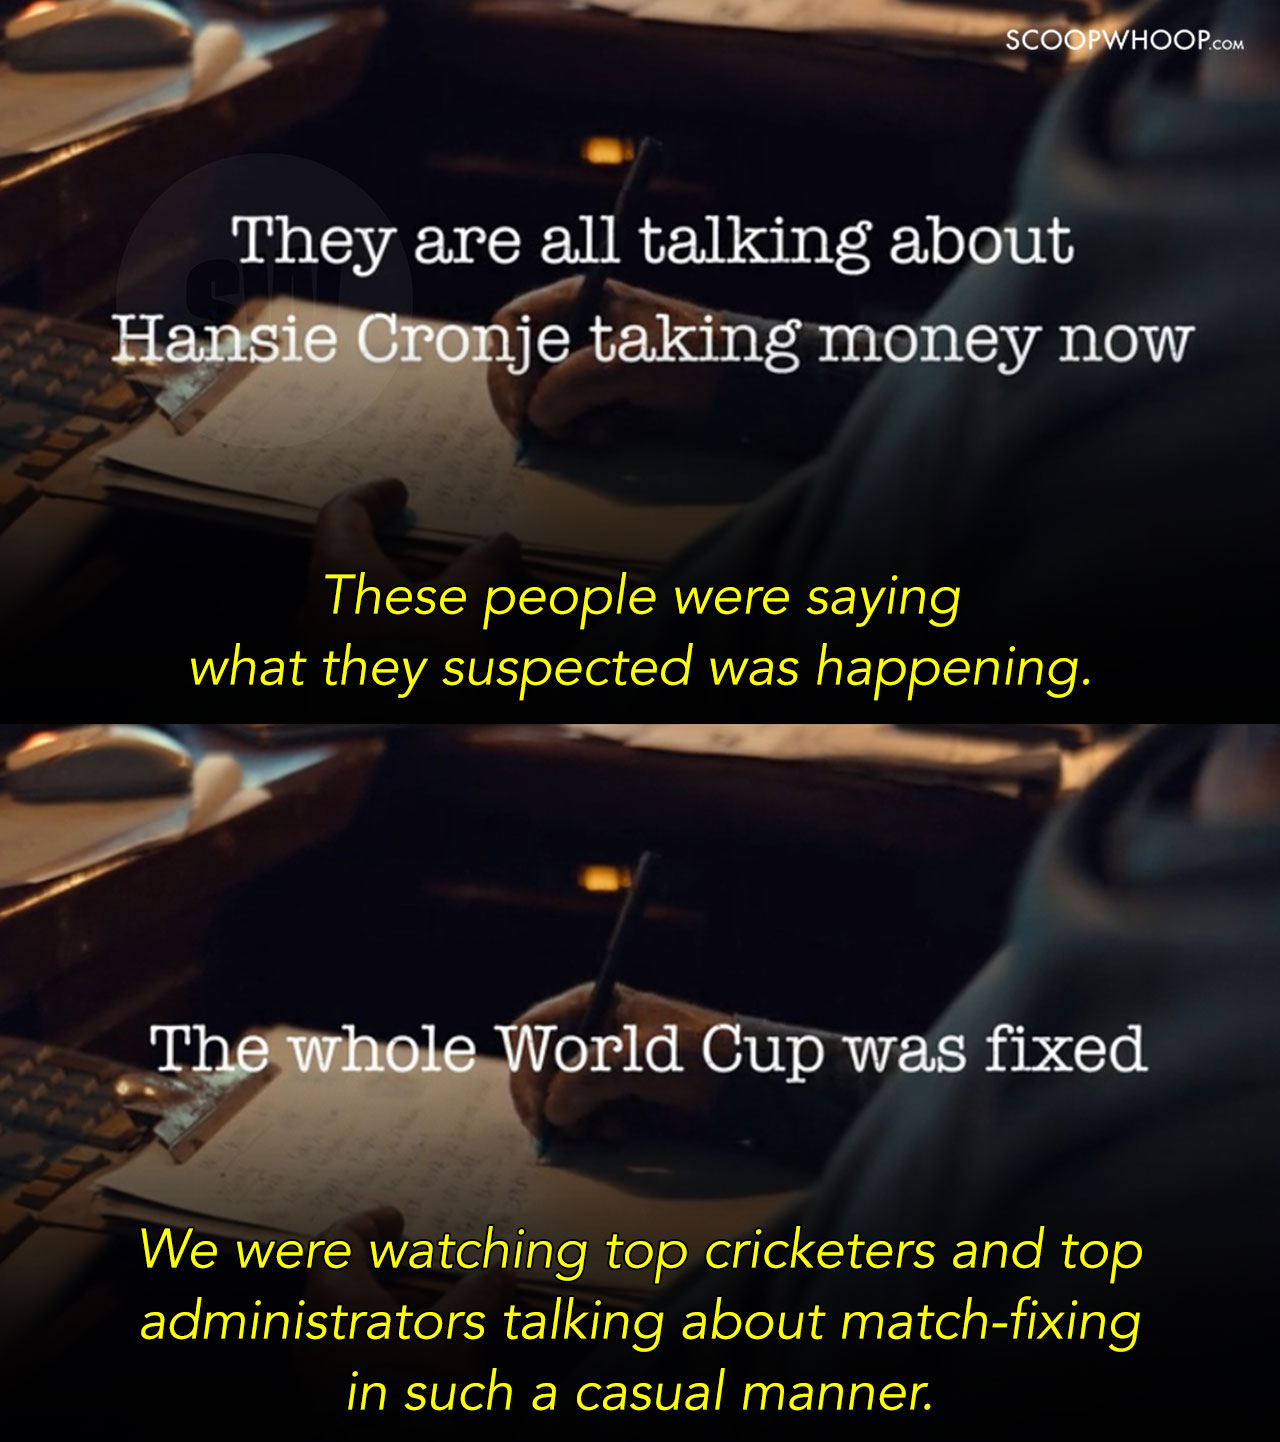 match-fixing scandal cricket 